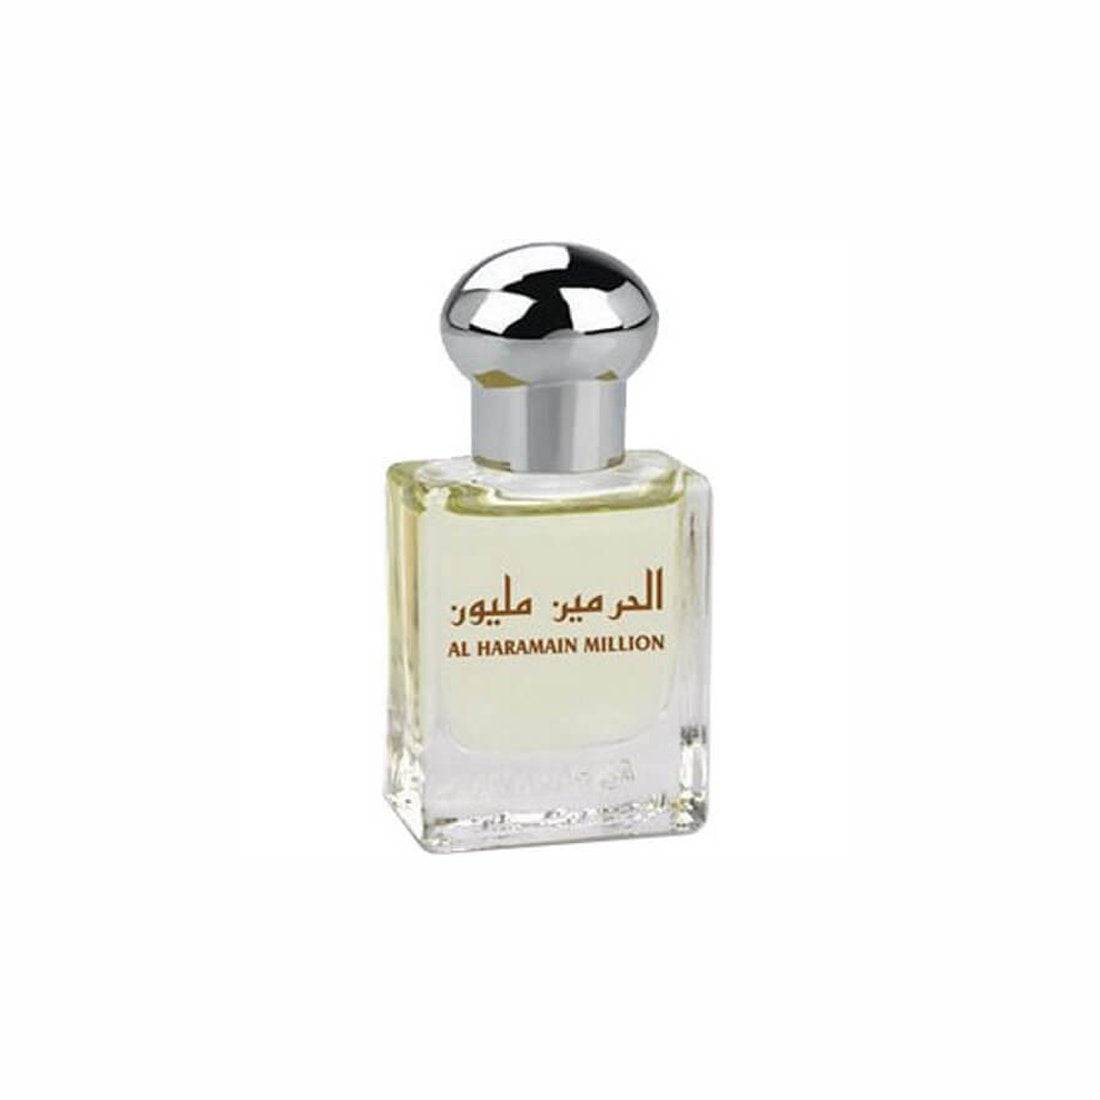 Al Haramain Million Perfume Oil-15ml(0.51 oz) by Haramain - Intense oud